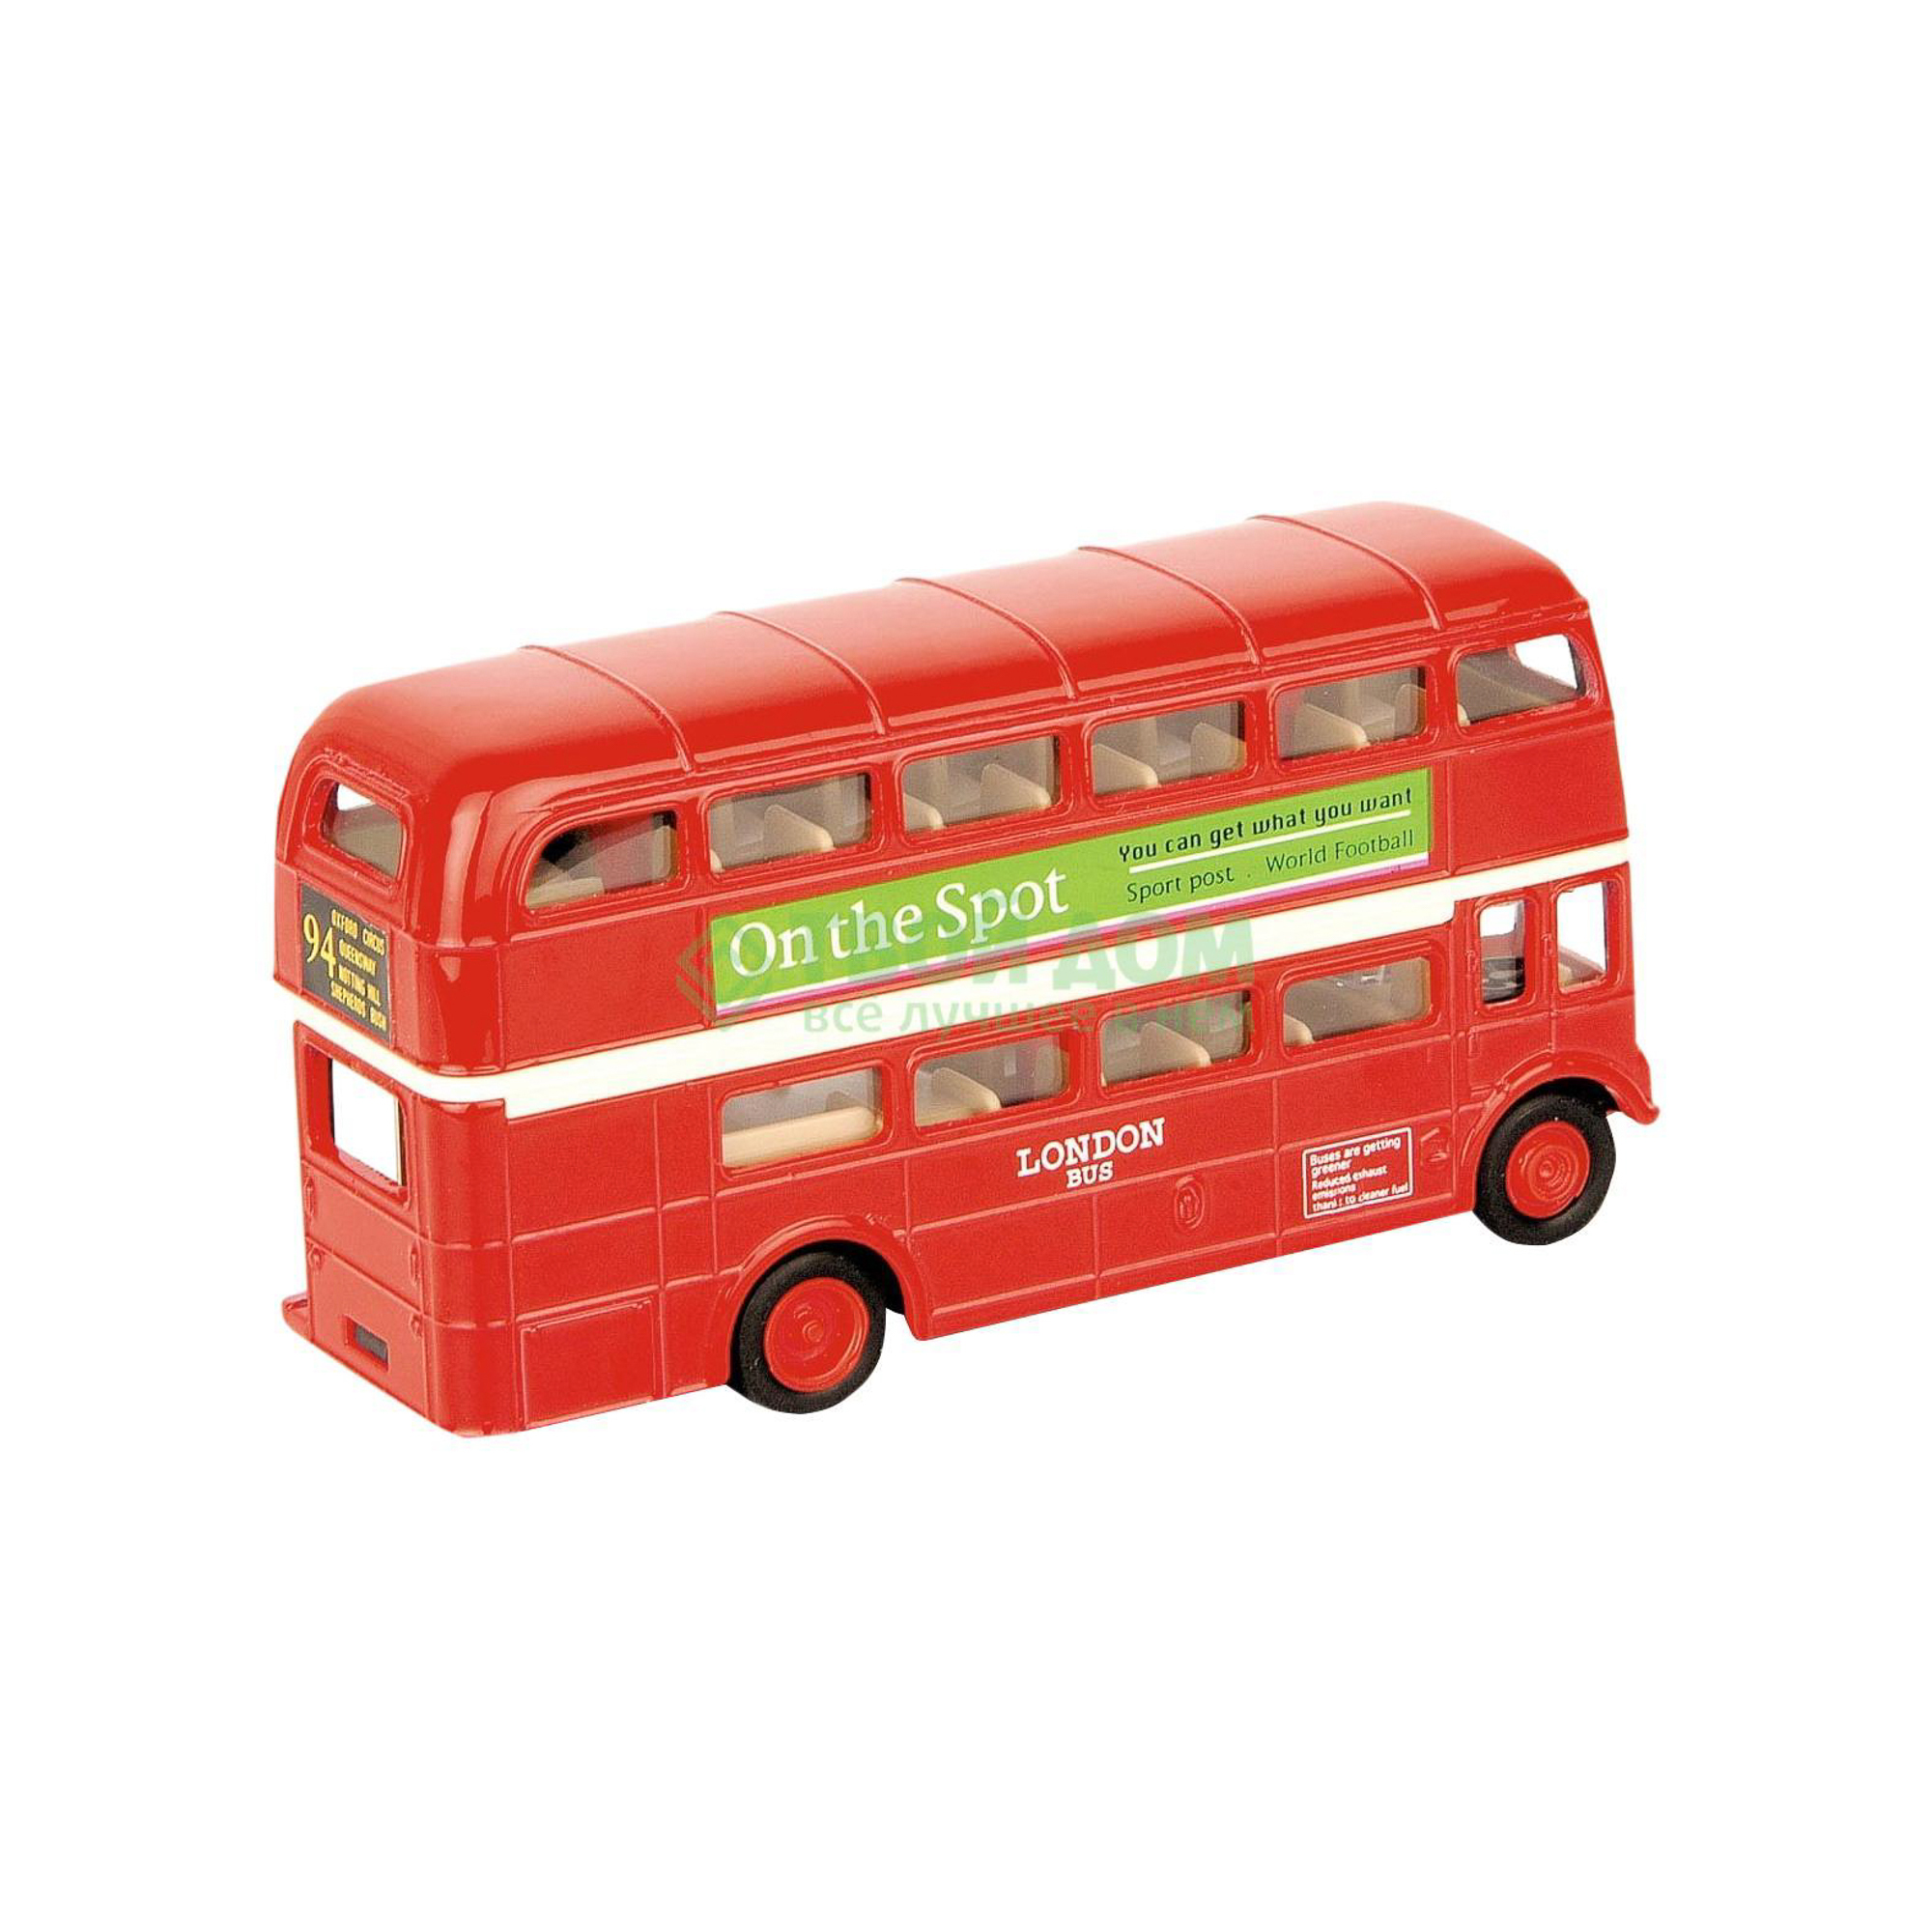 Машинка Welly London bus (99930), цвет красный - фото 1